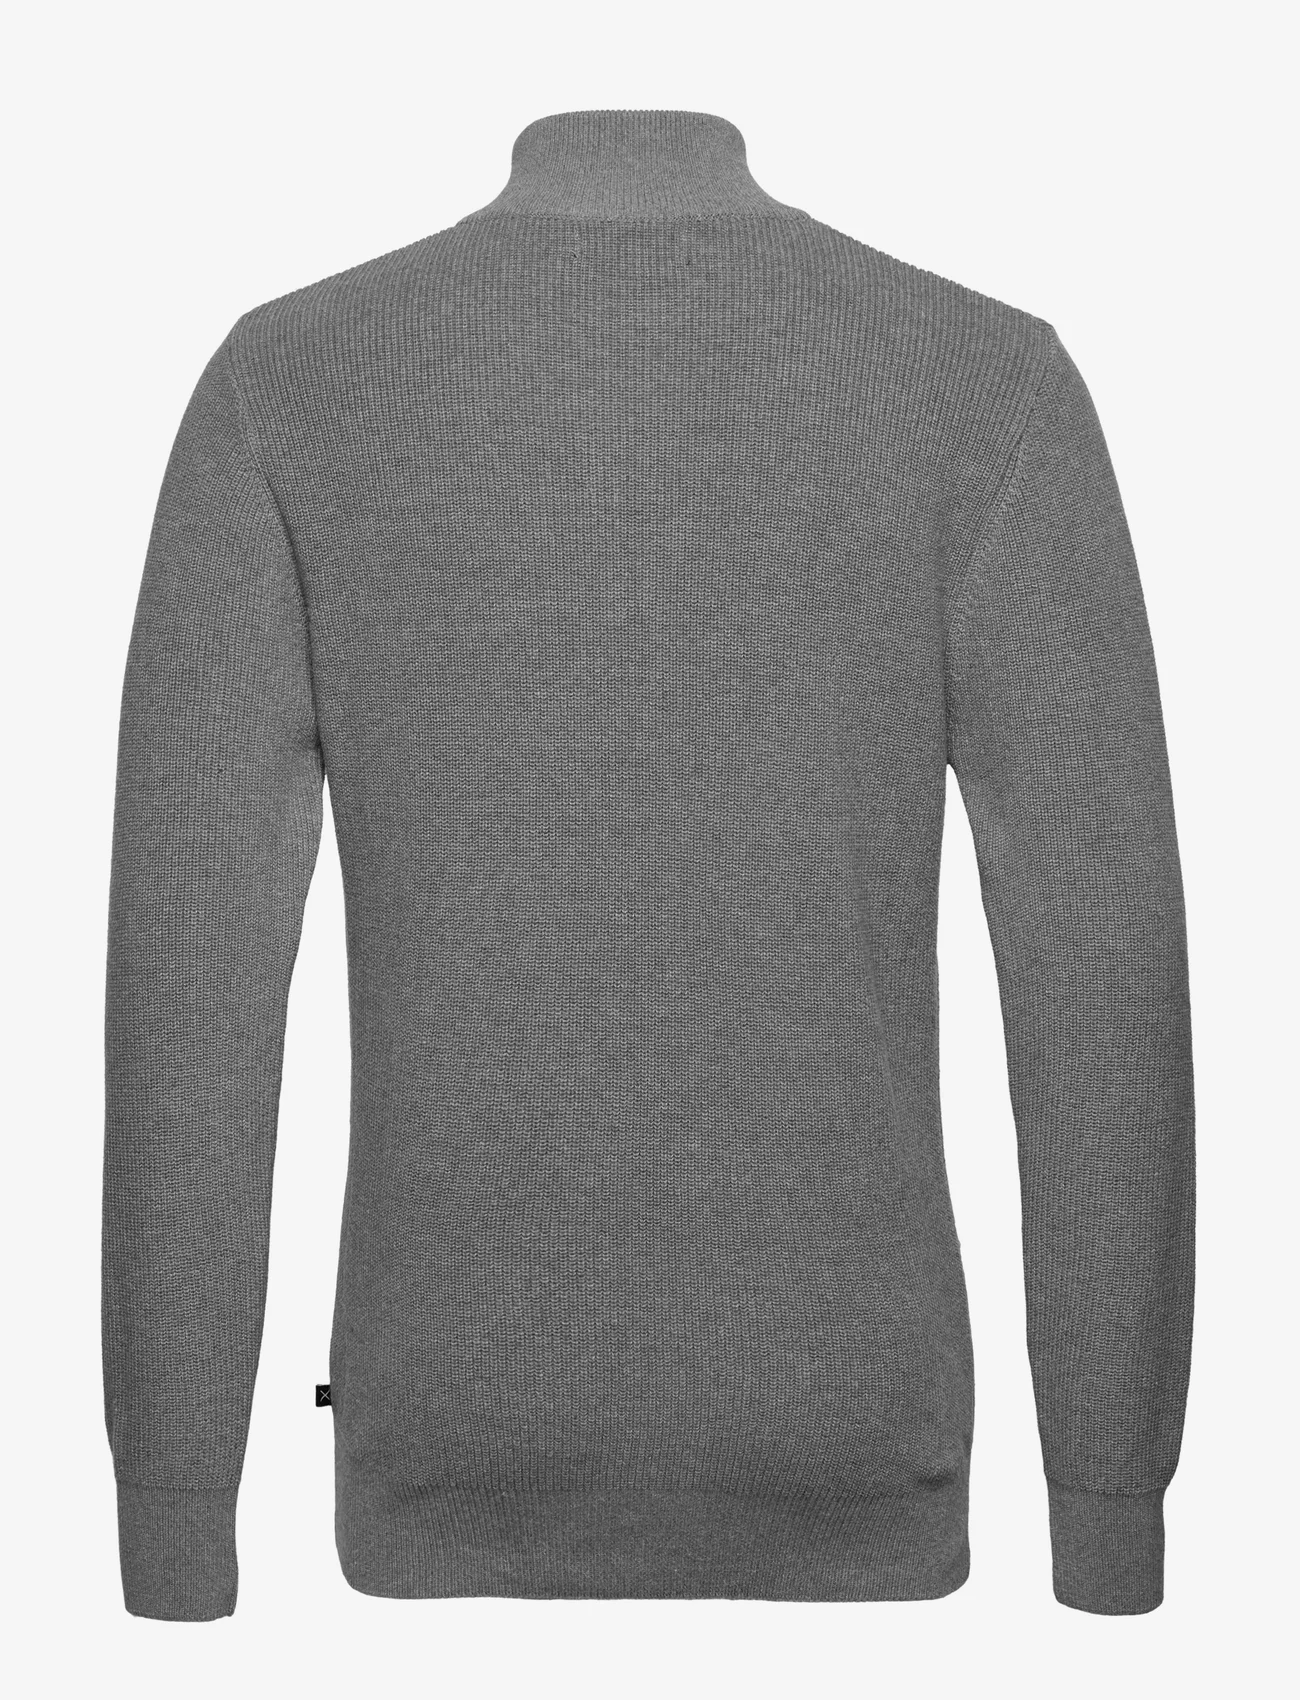 Clean Cut Copenhagen - Mario Half Zip - basic knitwear - light grey mel - 1